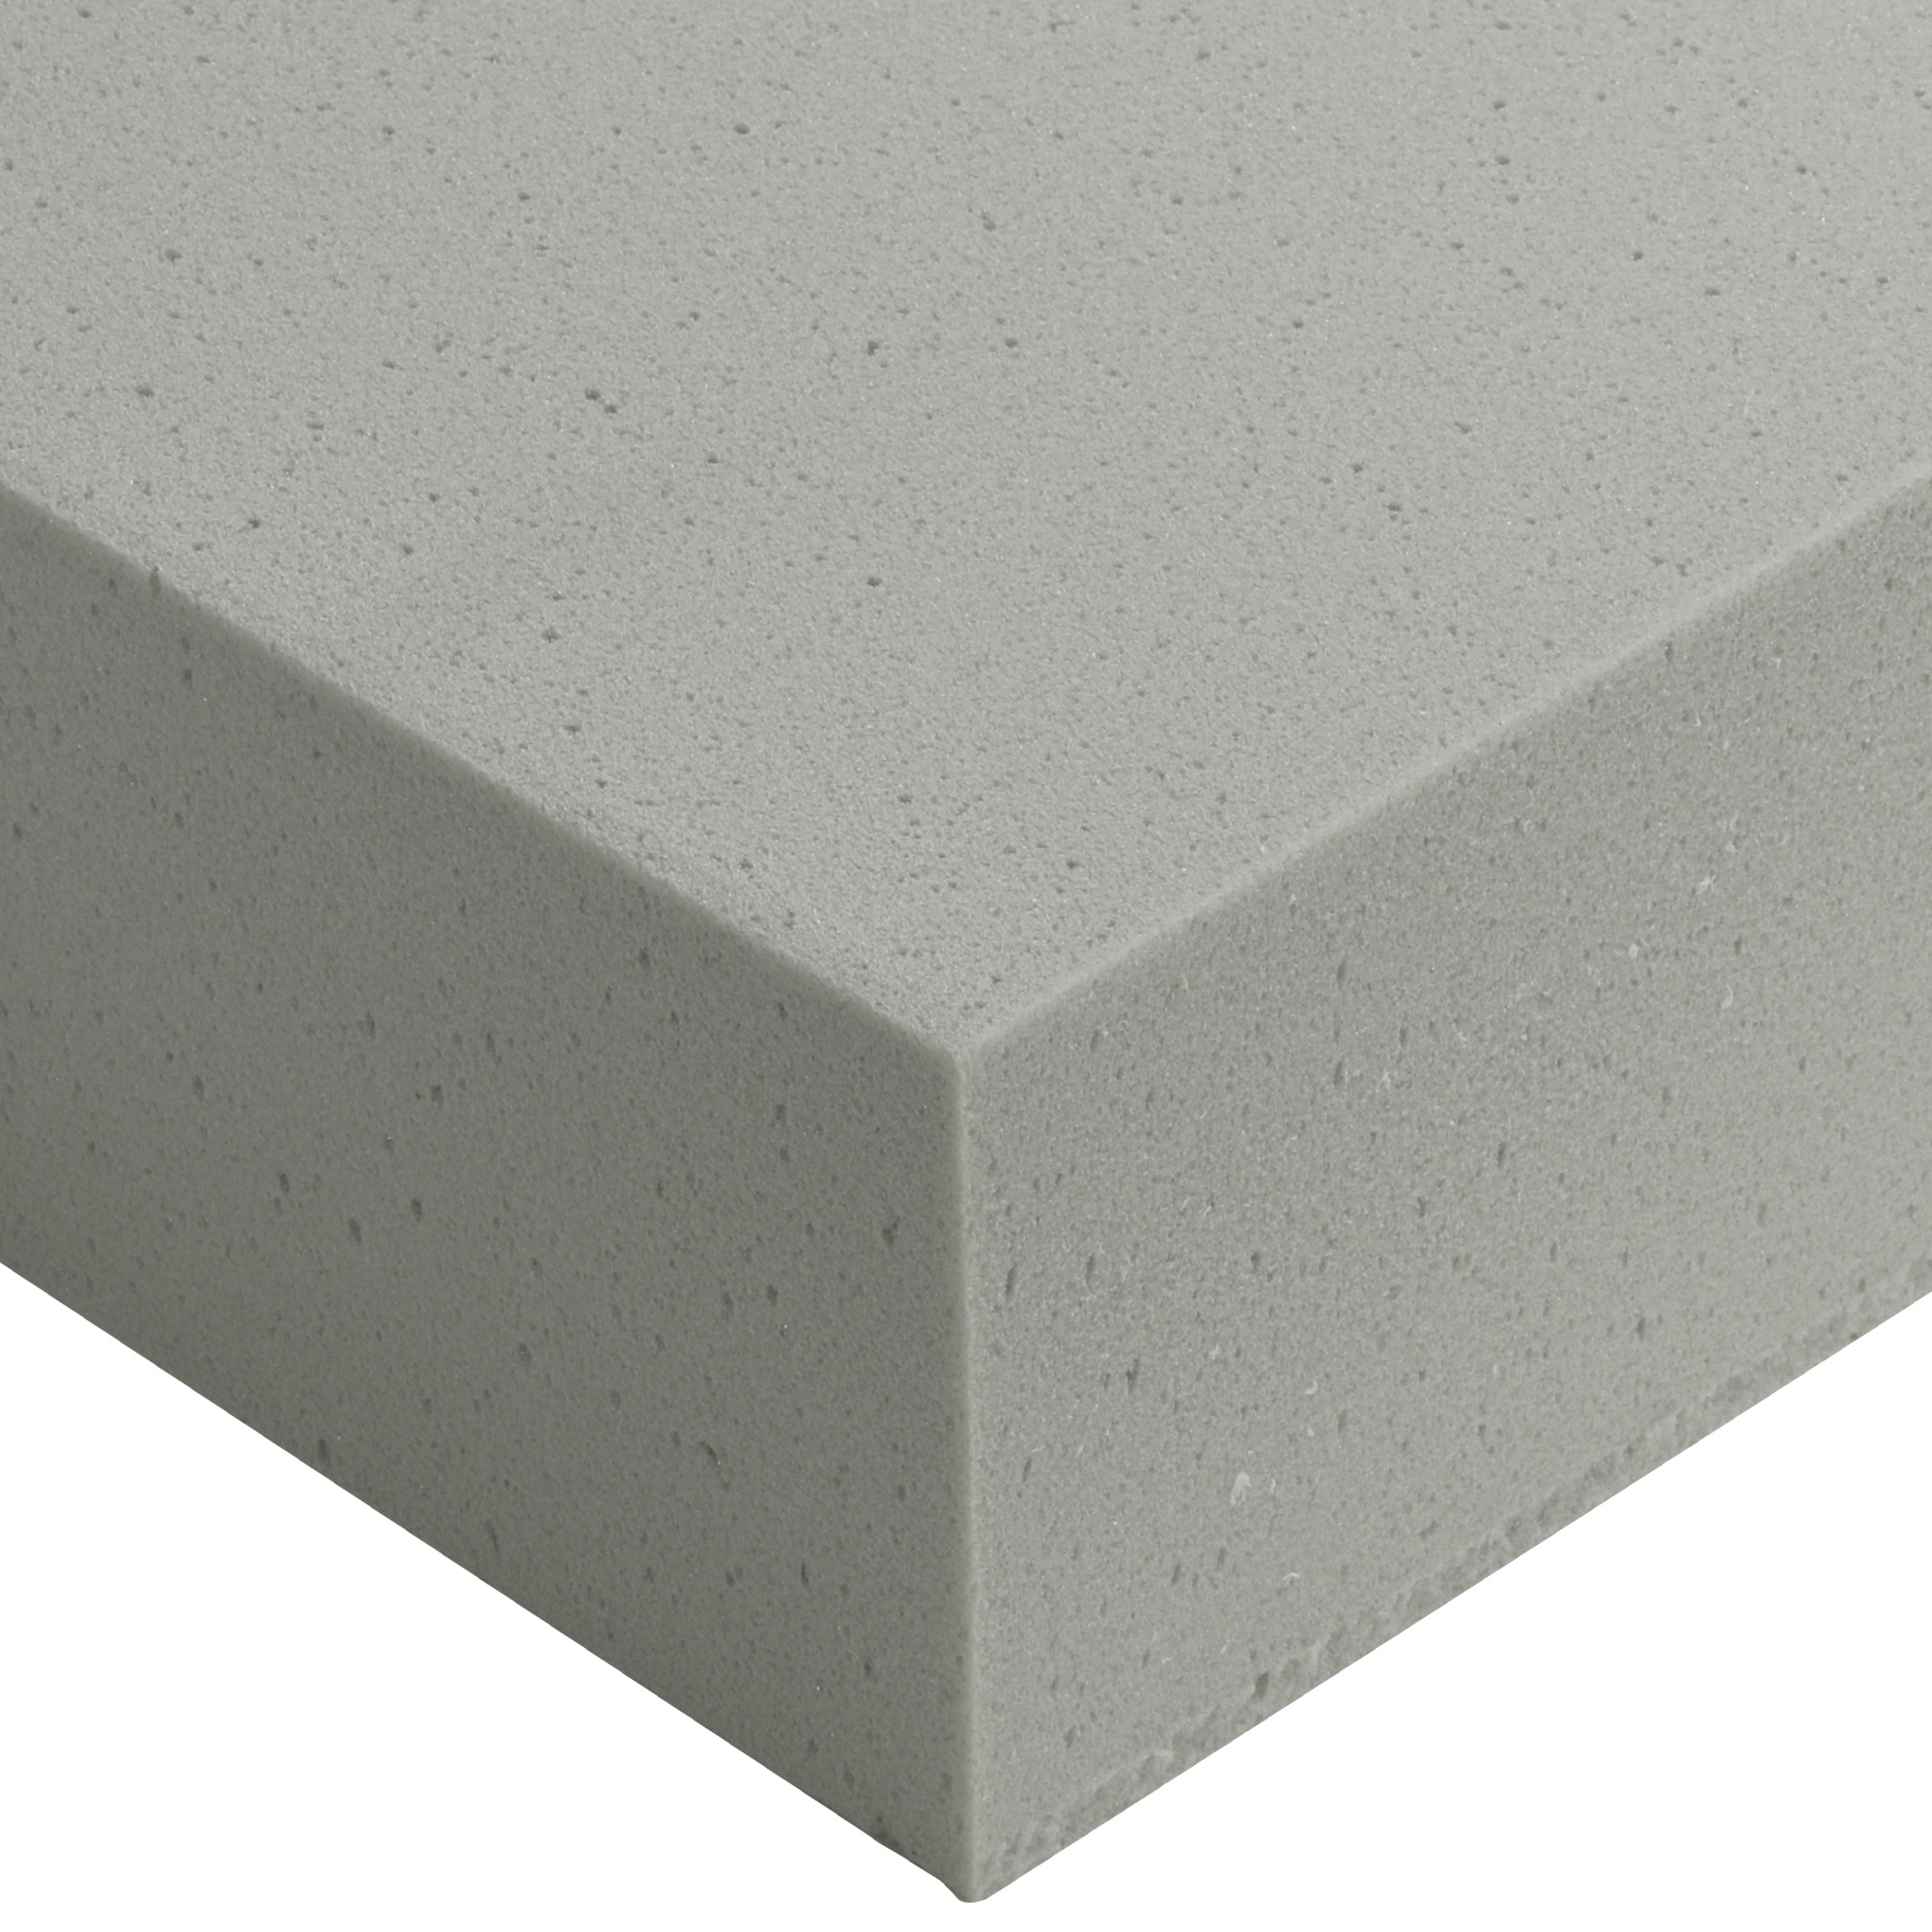 XPS Extruded Polystyrene Foam (Styrofoam) 100mm - Easy Composites